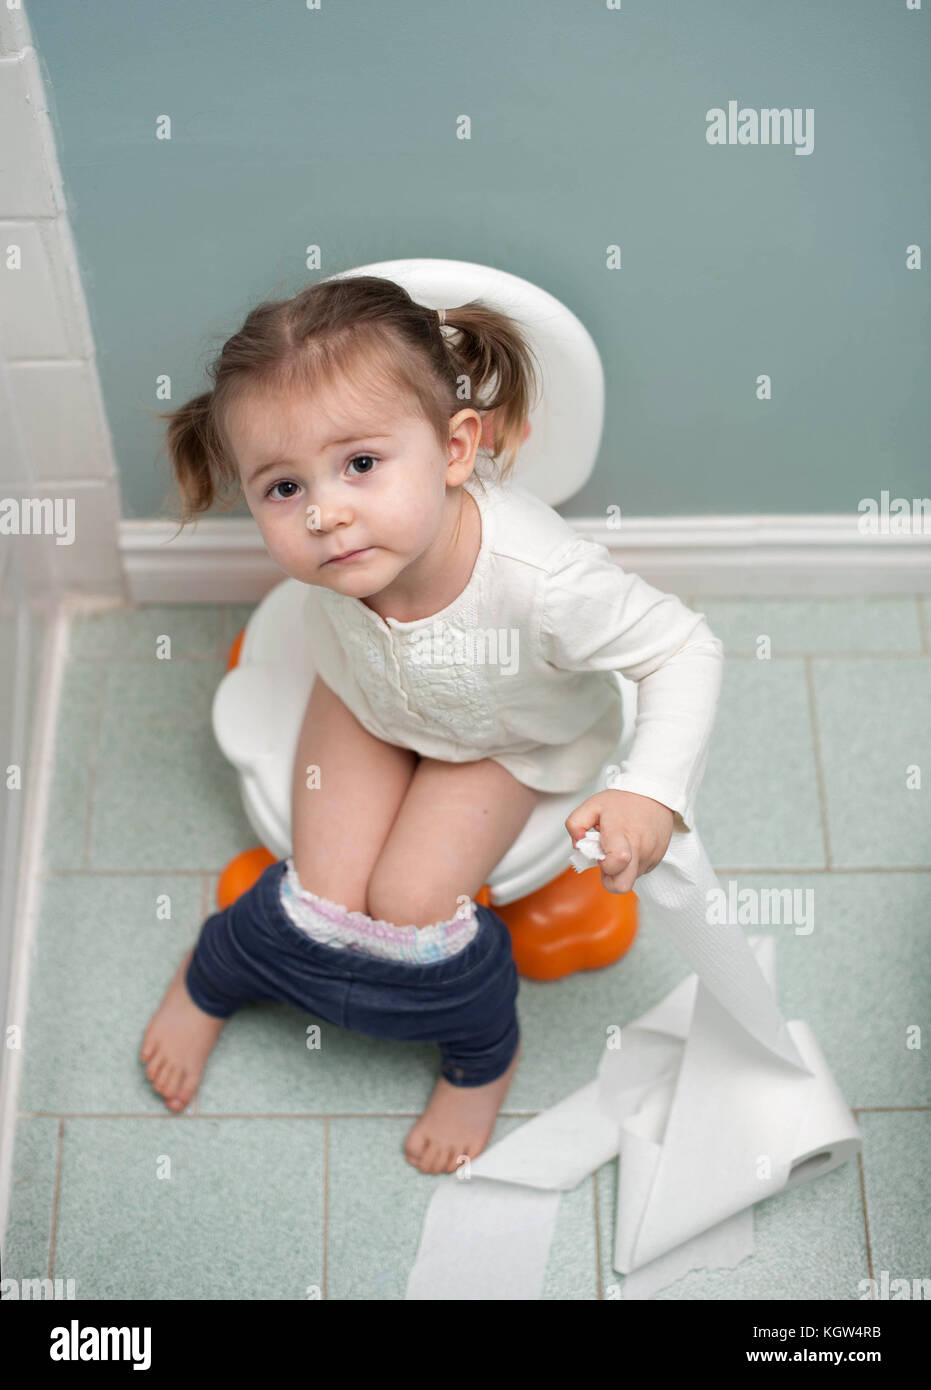 Toddler girl potty training holding toilet paper in bathroom Stock